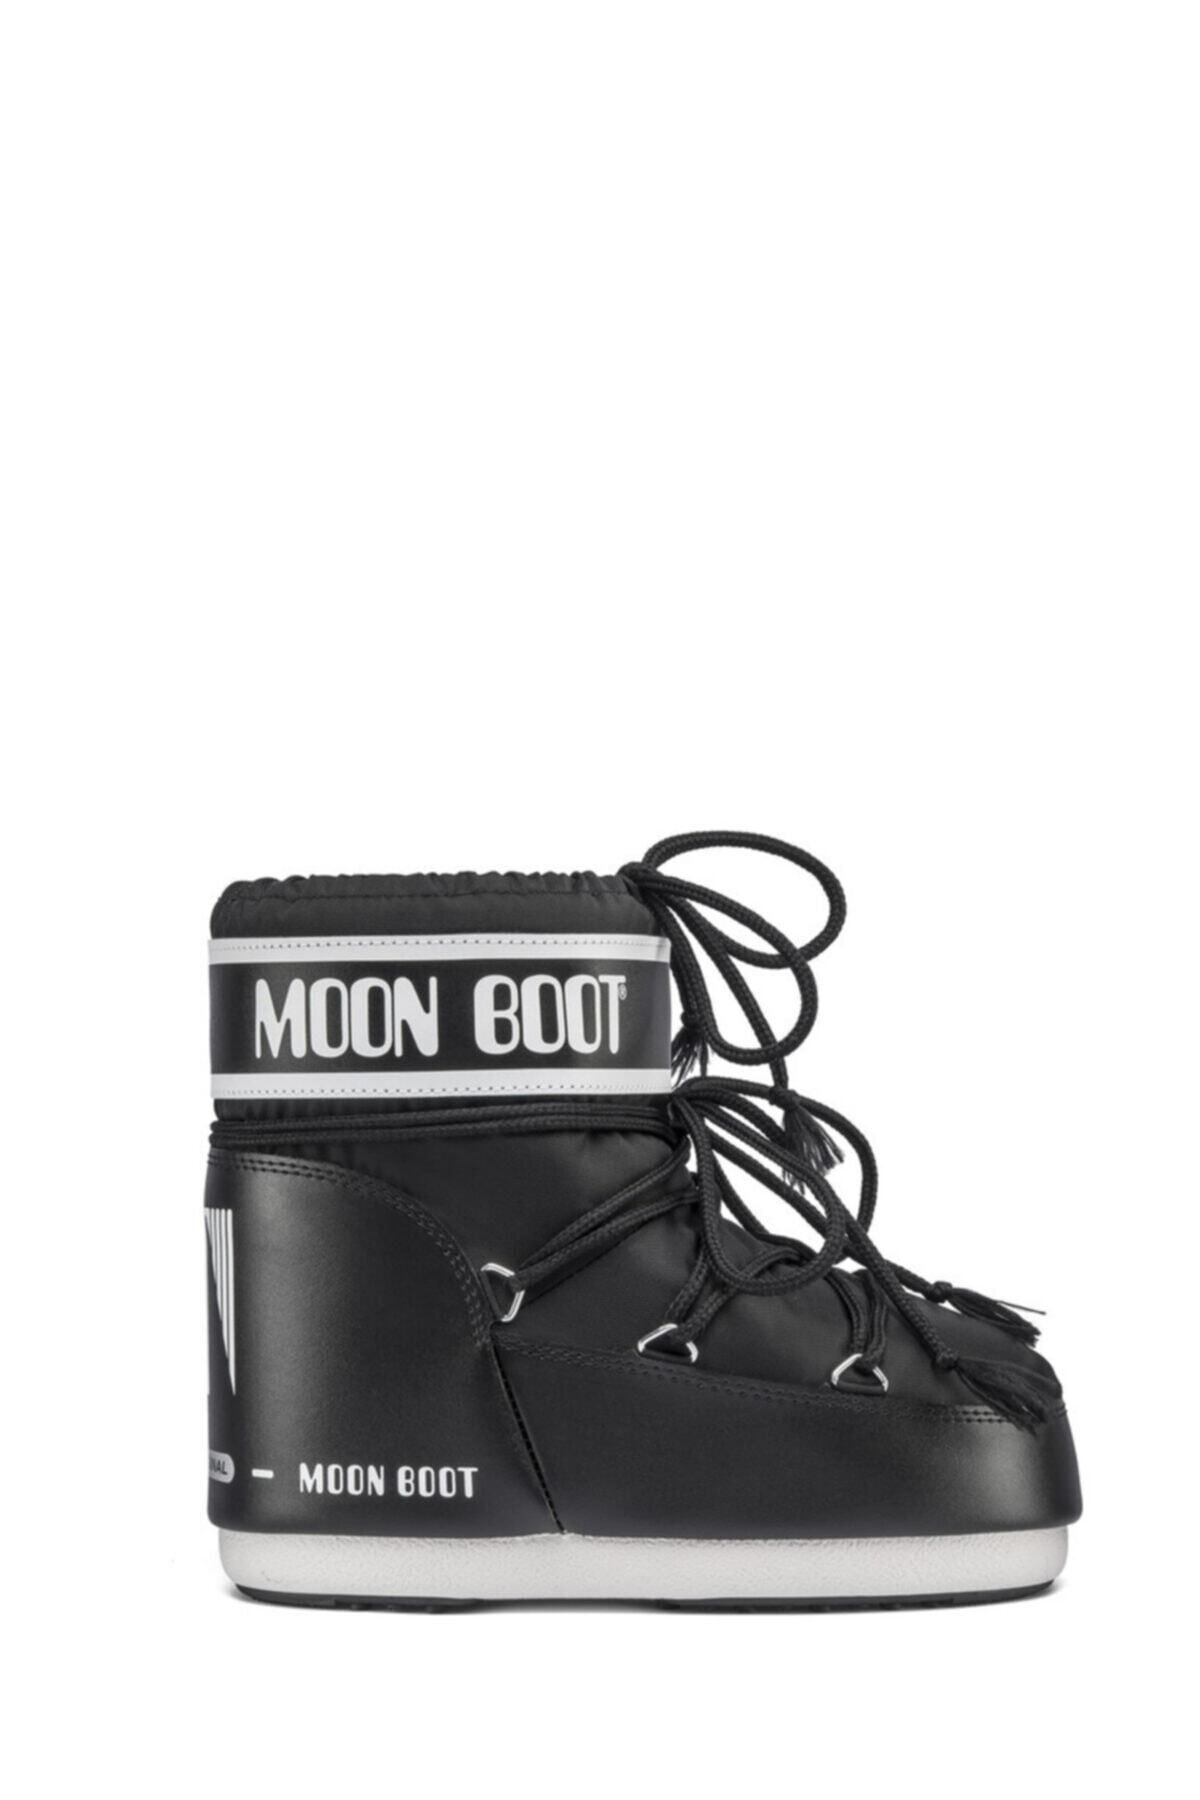 Moon Boot Kız Çocuk Siyah Kar Botu 14093400-001 Classıc Low 2 Black 27-35 Sıze